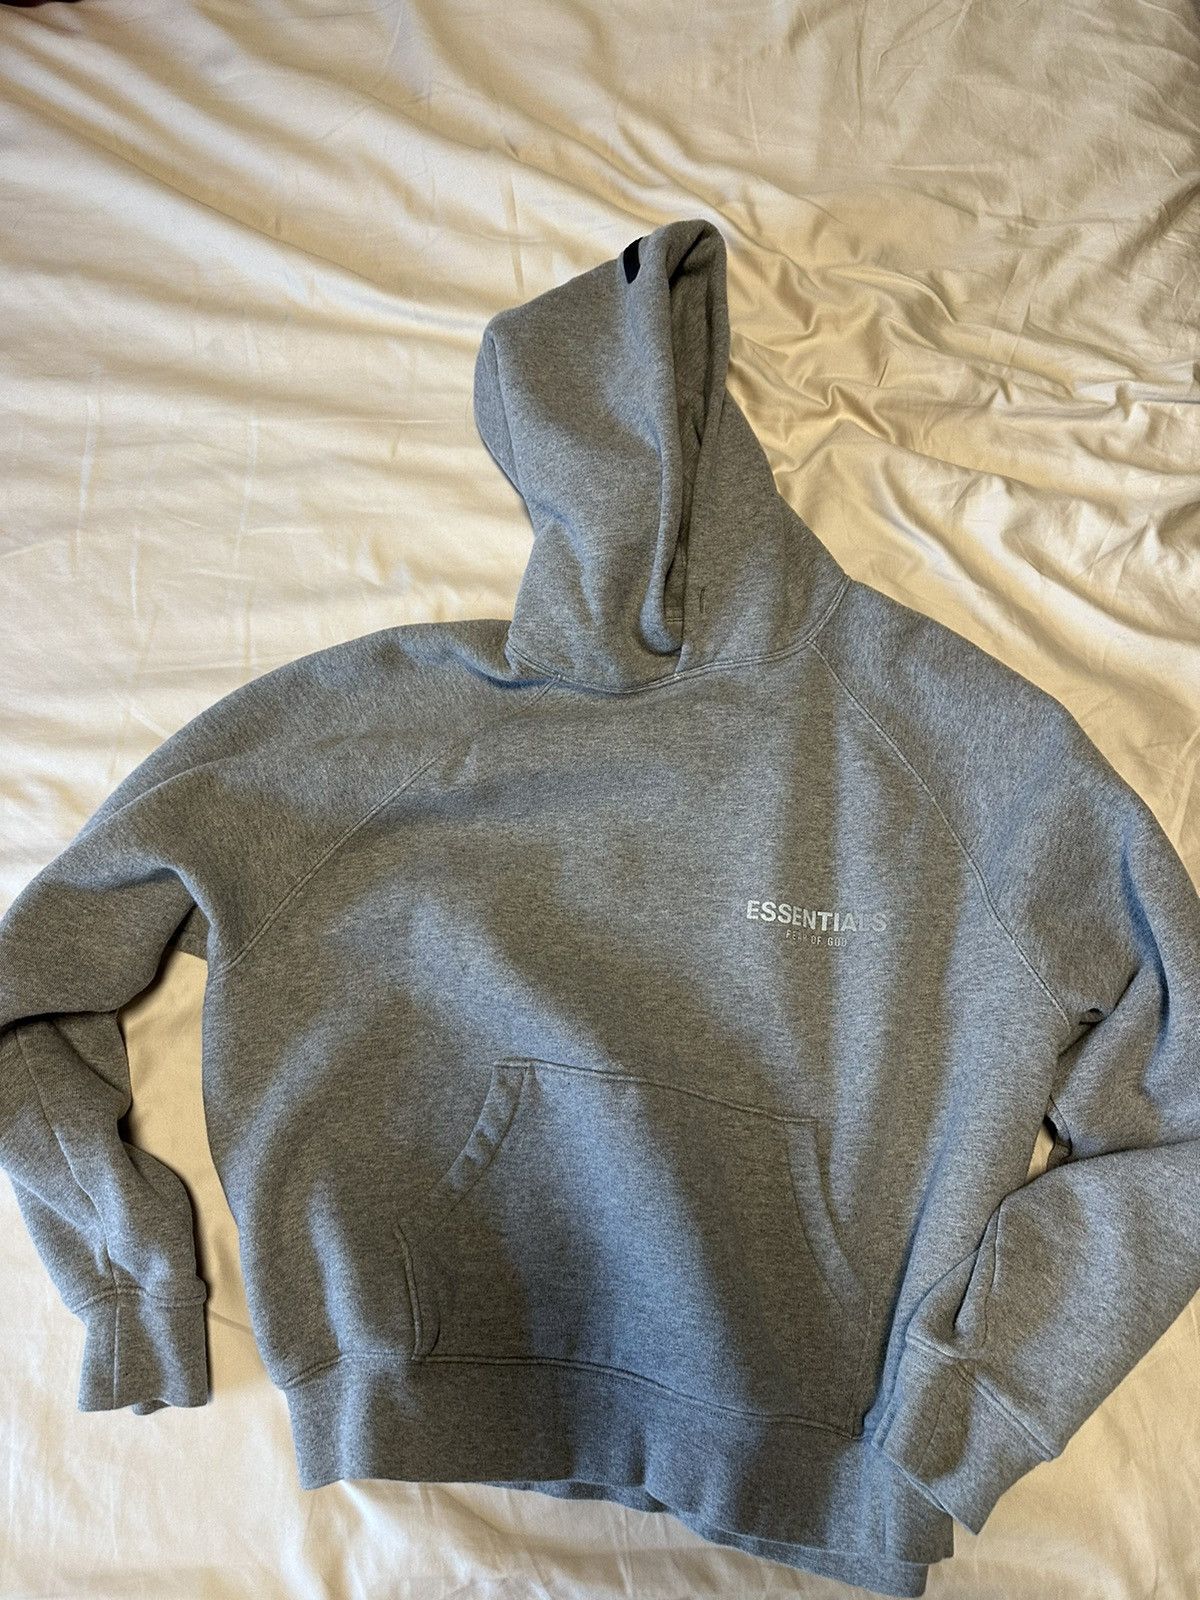 Fear of God FOG essentials hoodie reflective | Grailed